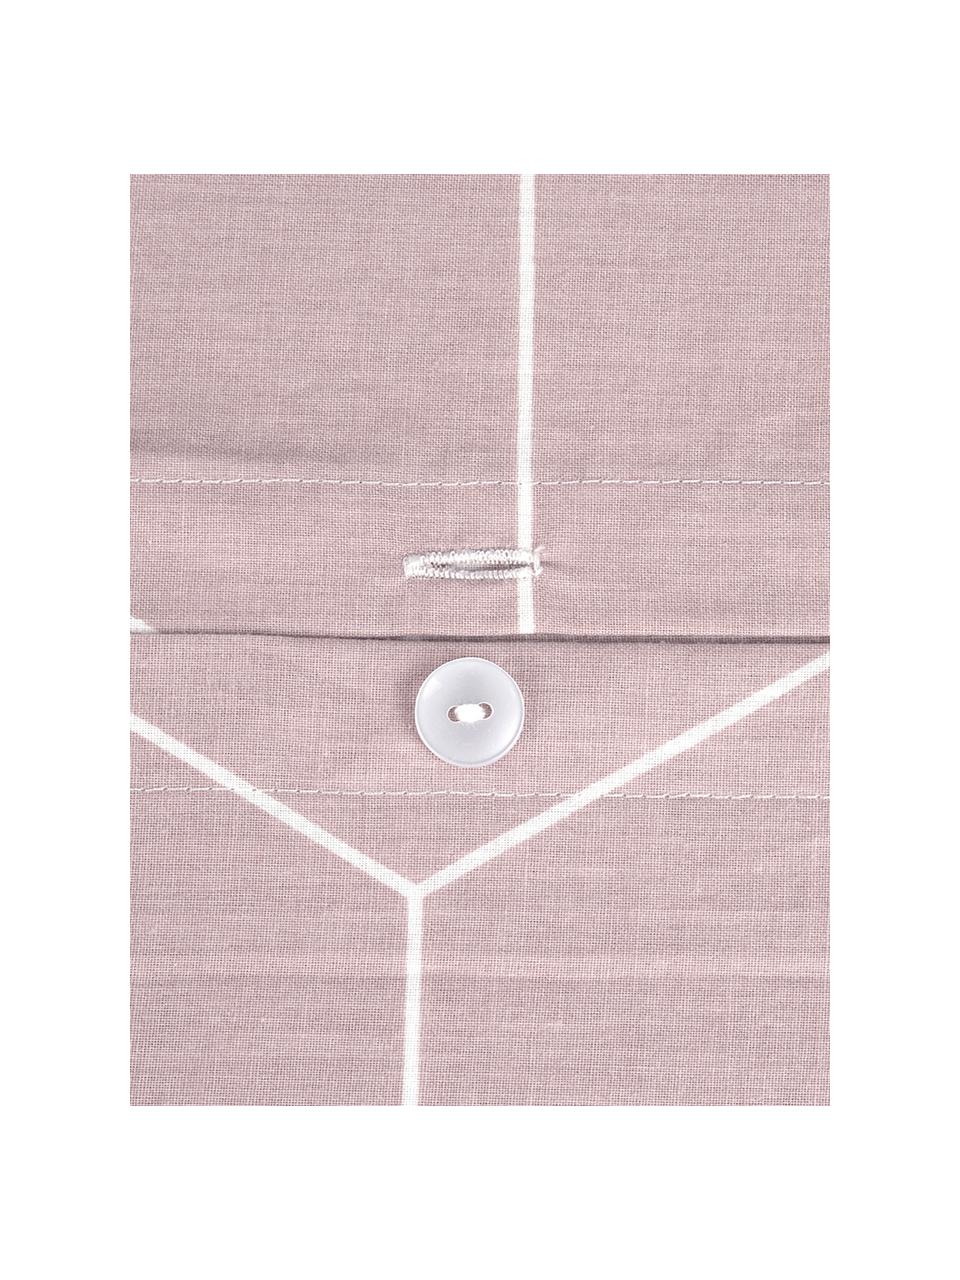 Funda de almohada de algodón Lynn, 50 x 70 cm, Rosa palo, blanco crema, An 50 x L 70 cm